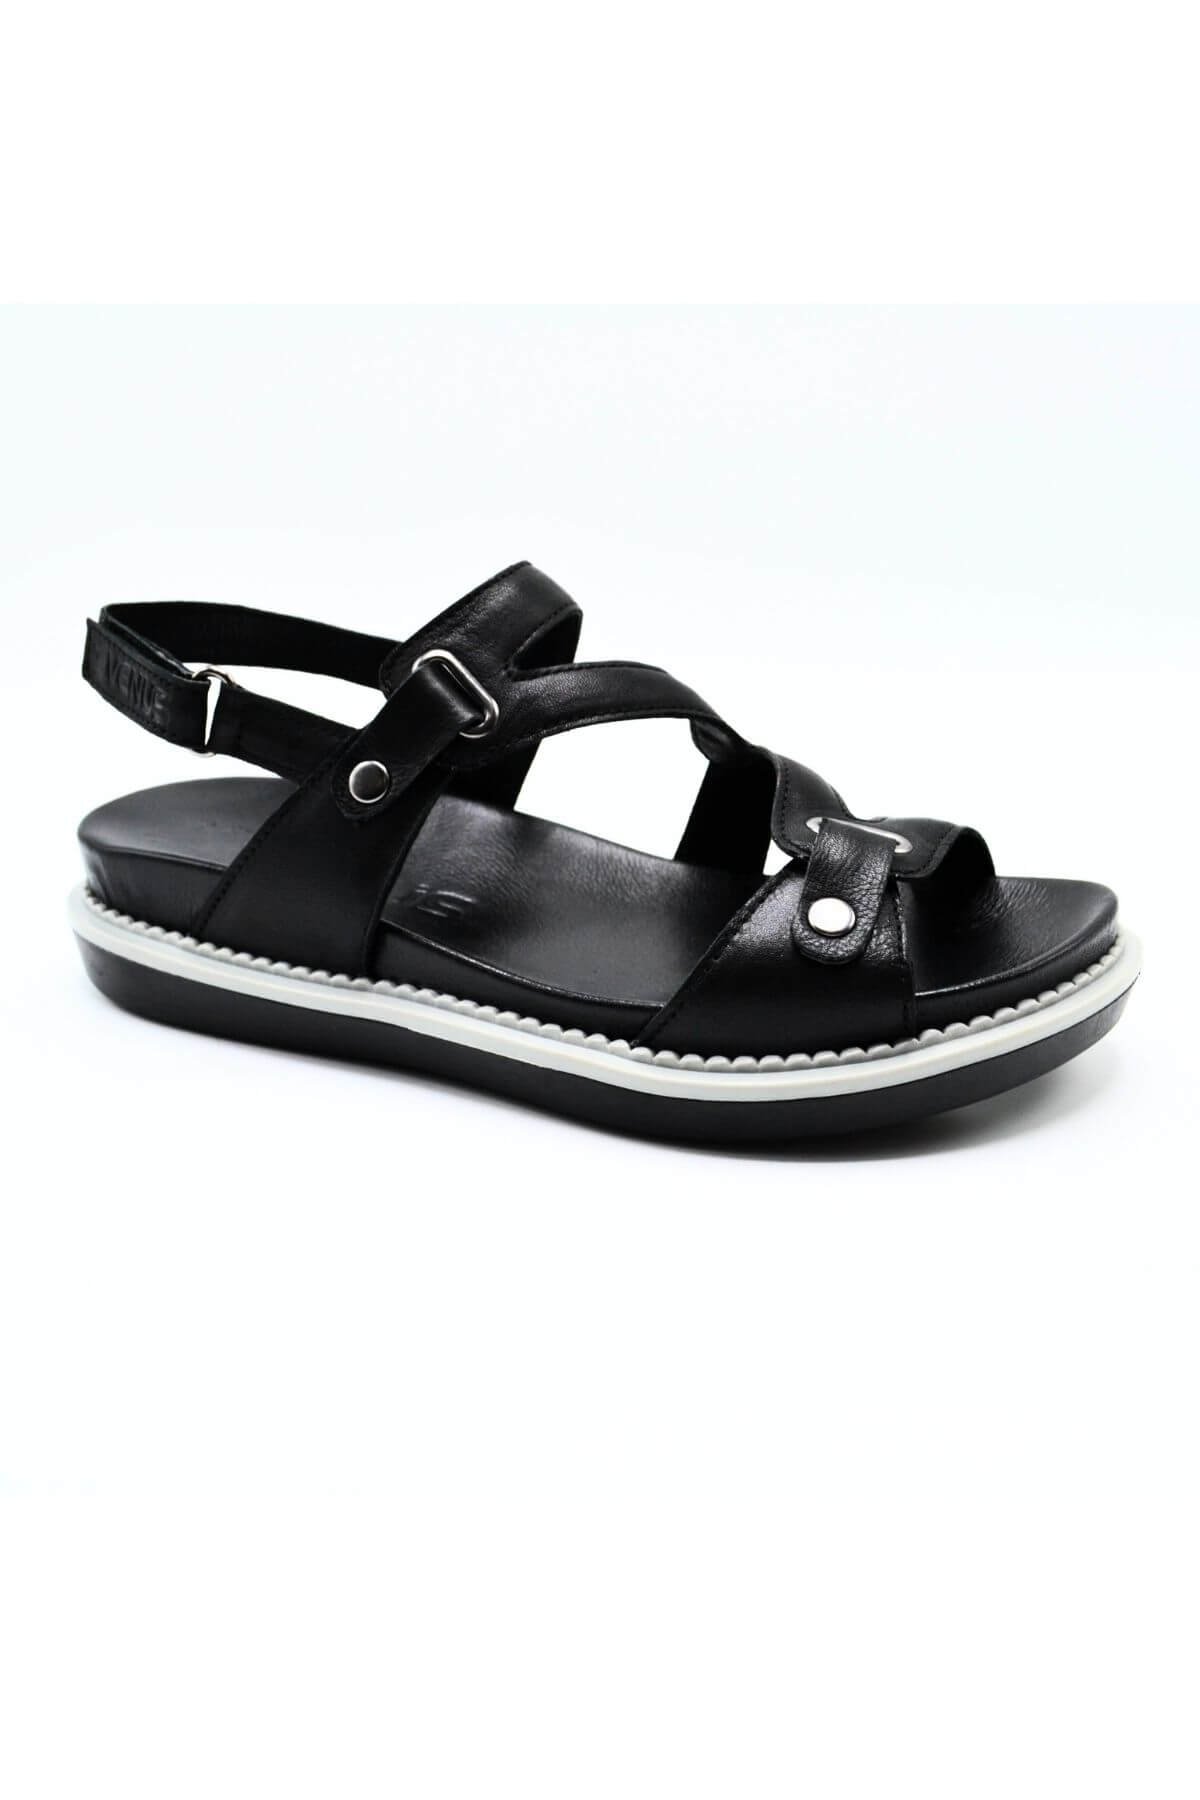 Kadın Comfort Deri Sandalet Siyah 202090Y - Thumbnail